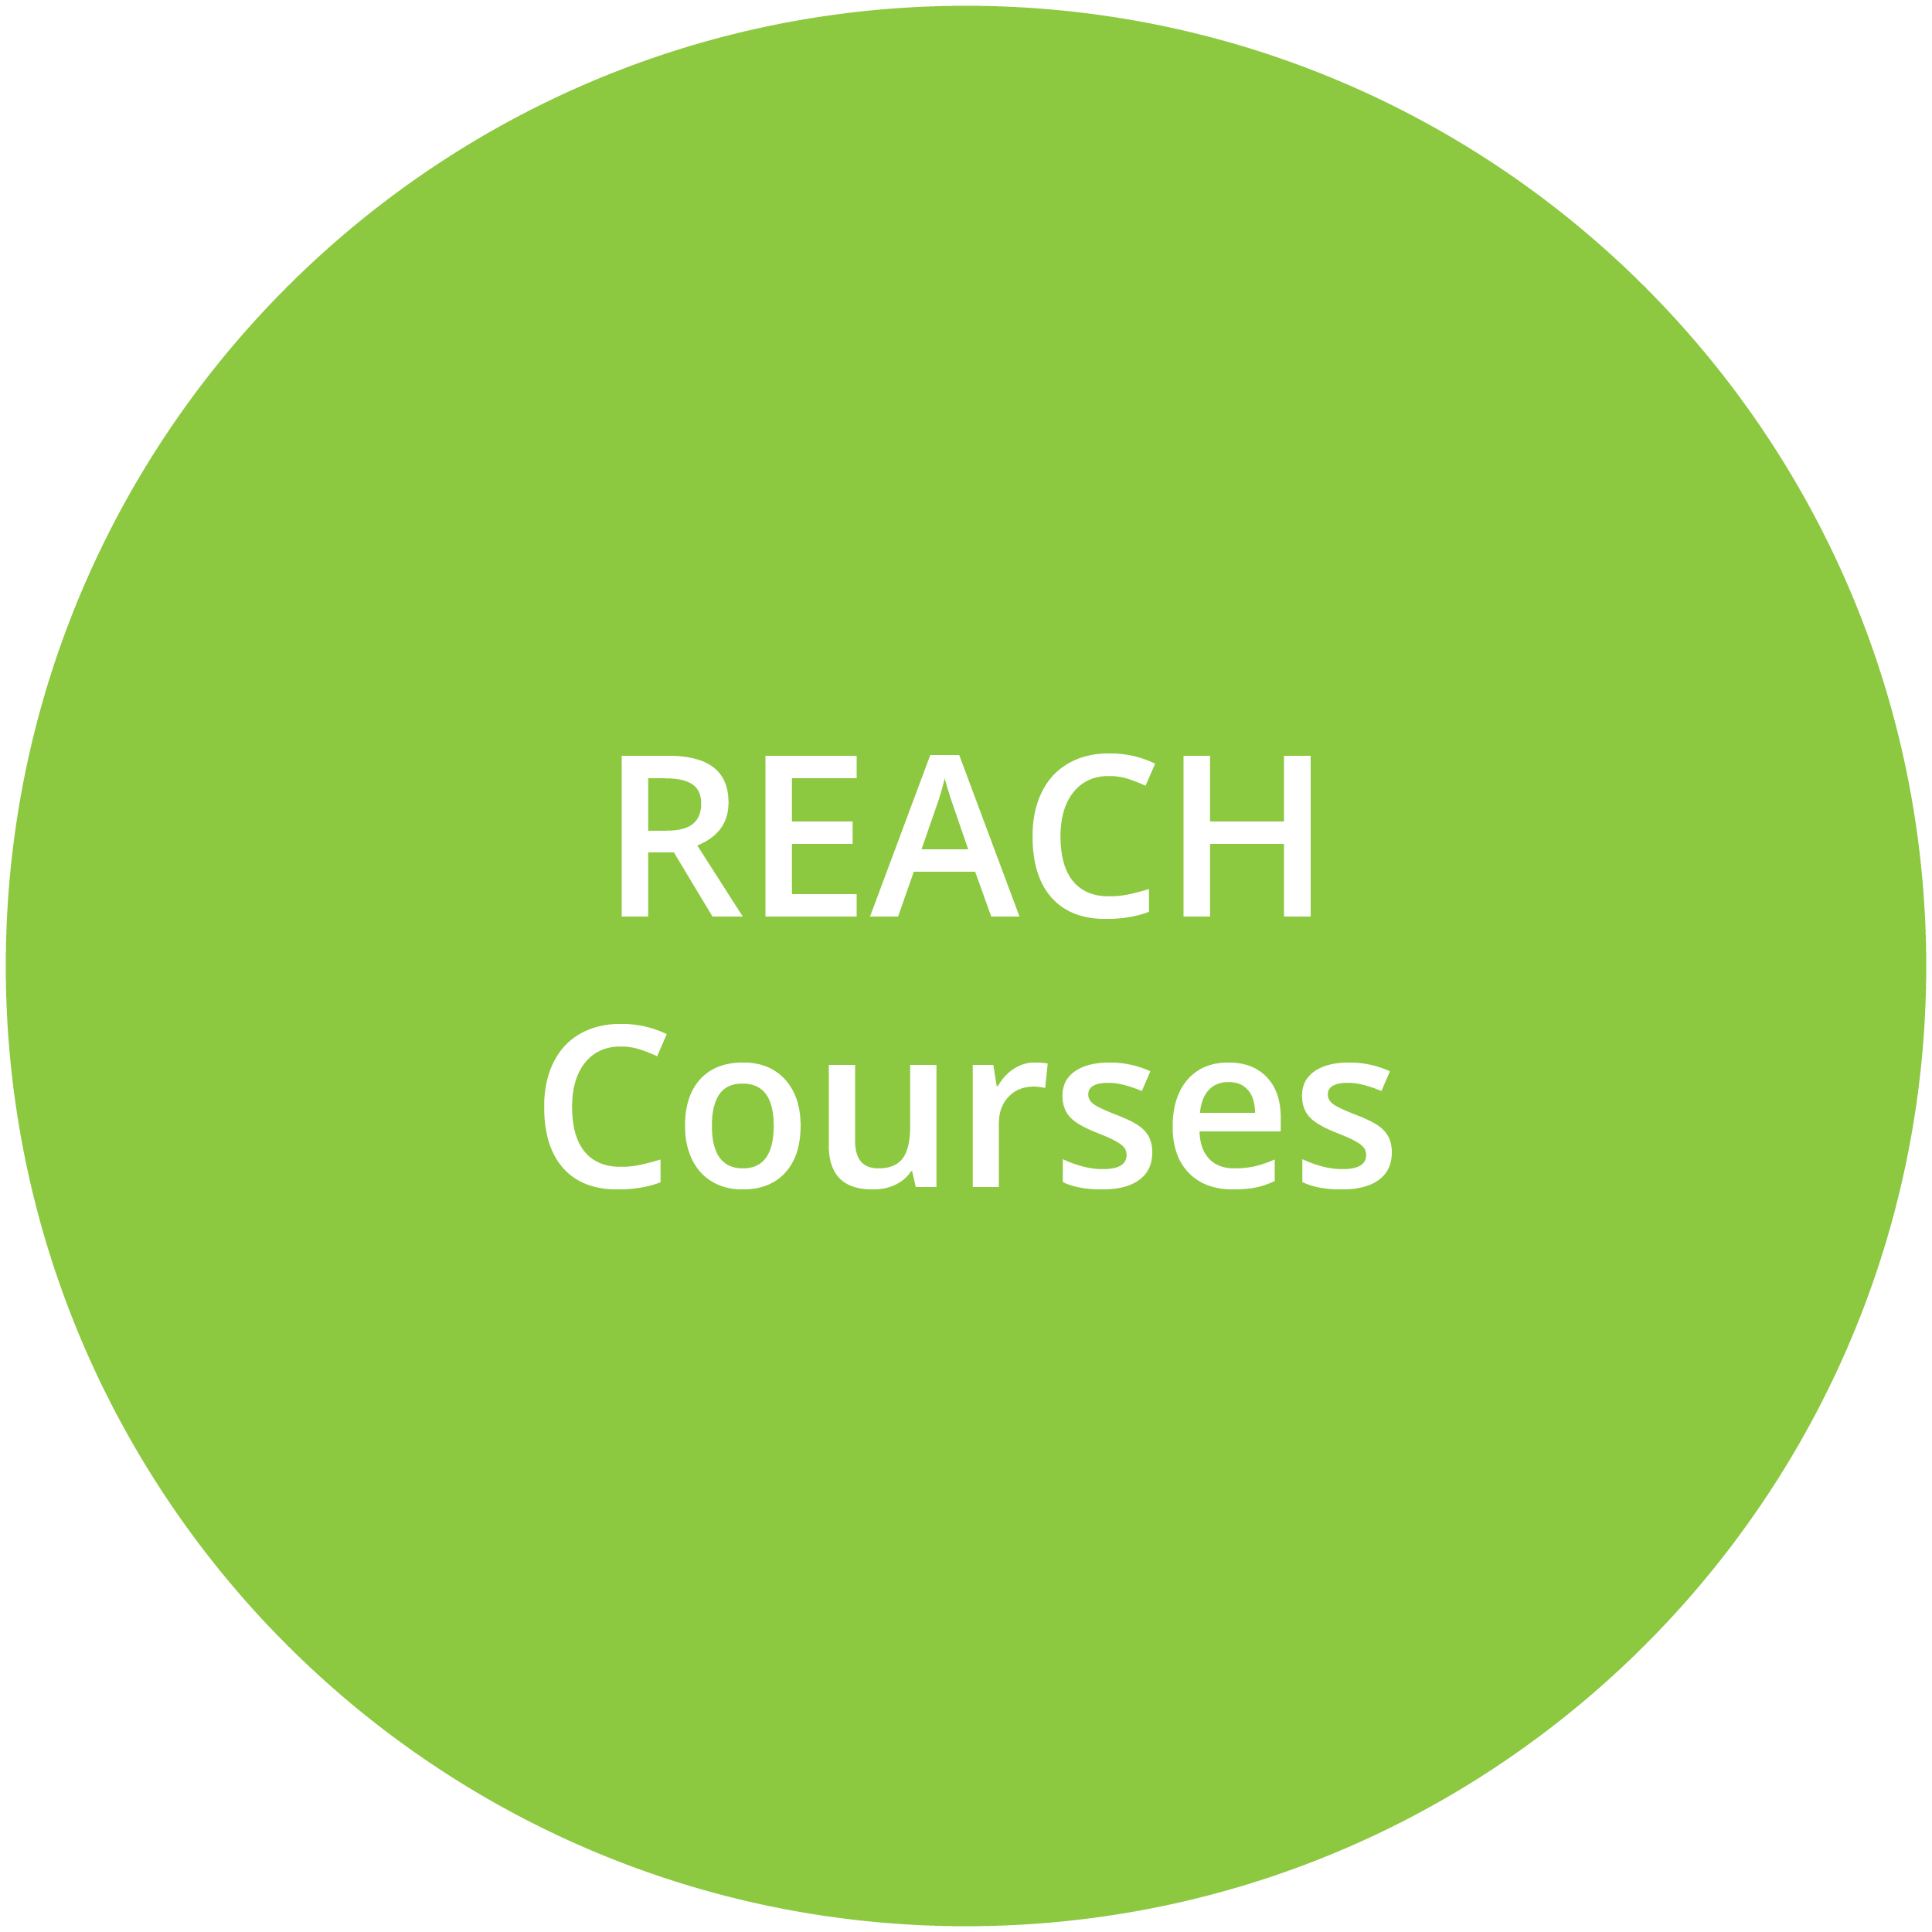 REACH Courses